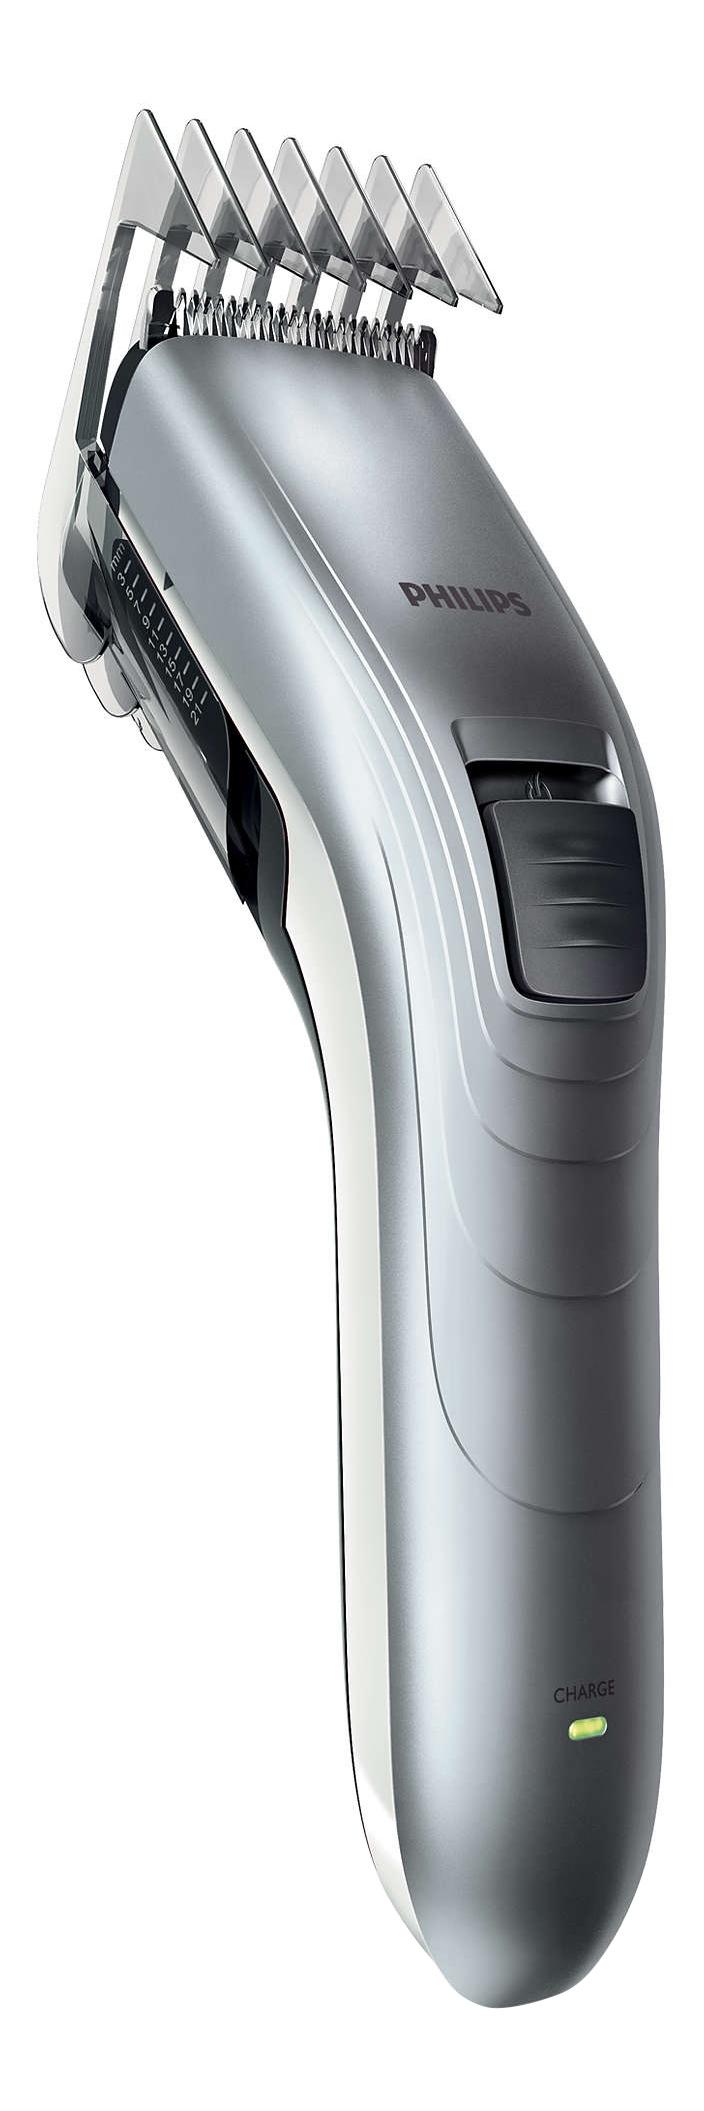 Машинка для стрижки волос Philips Series 3000 QC5130/ 15